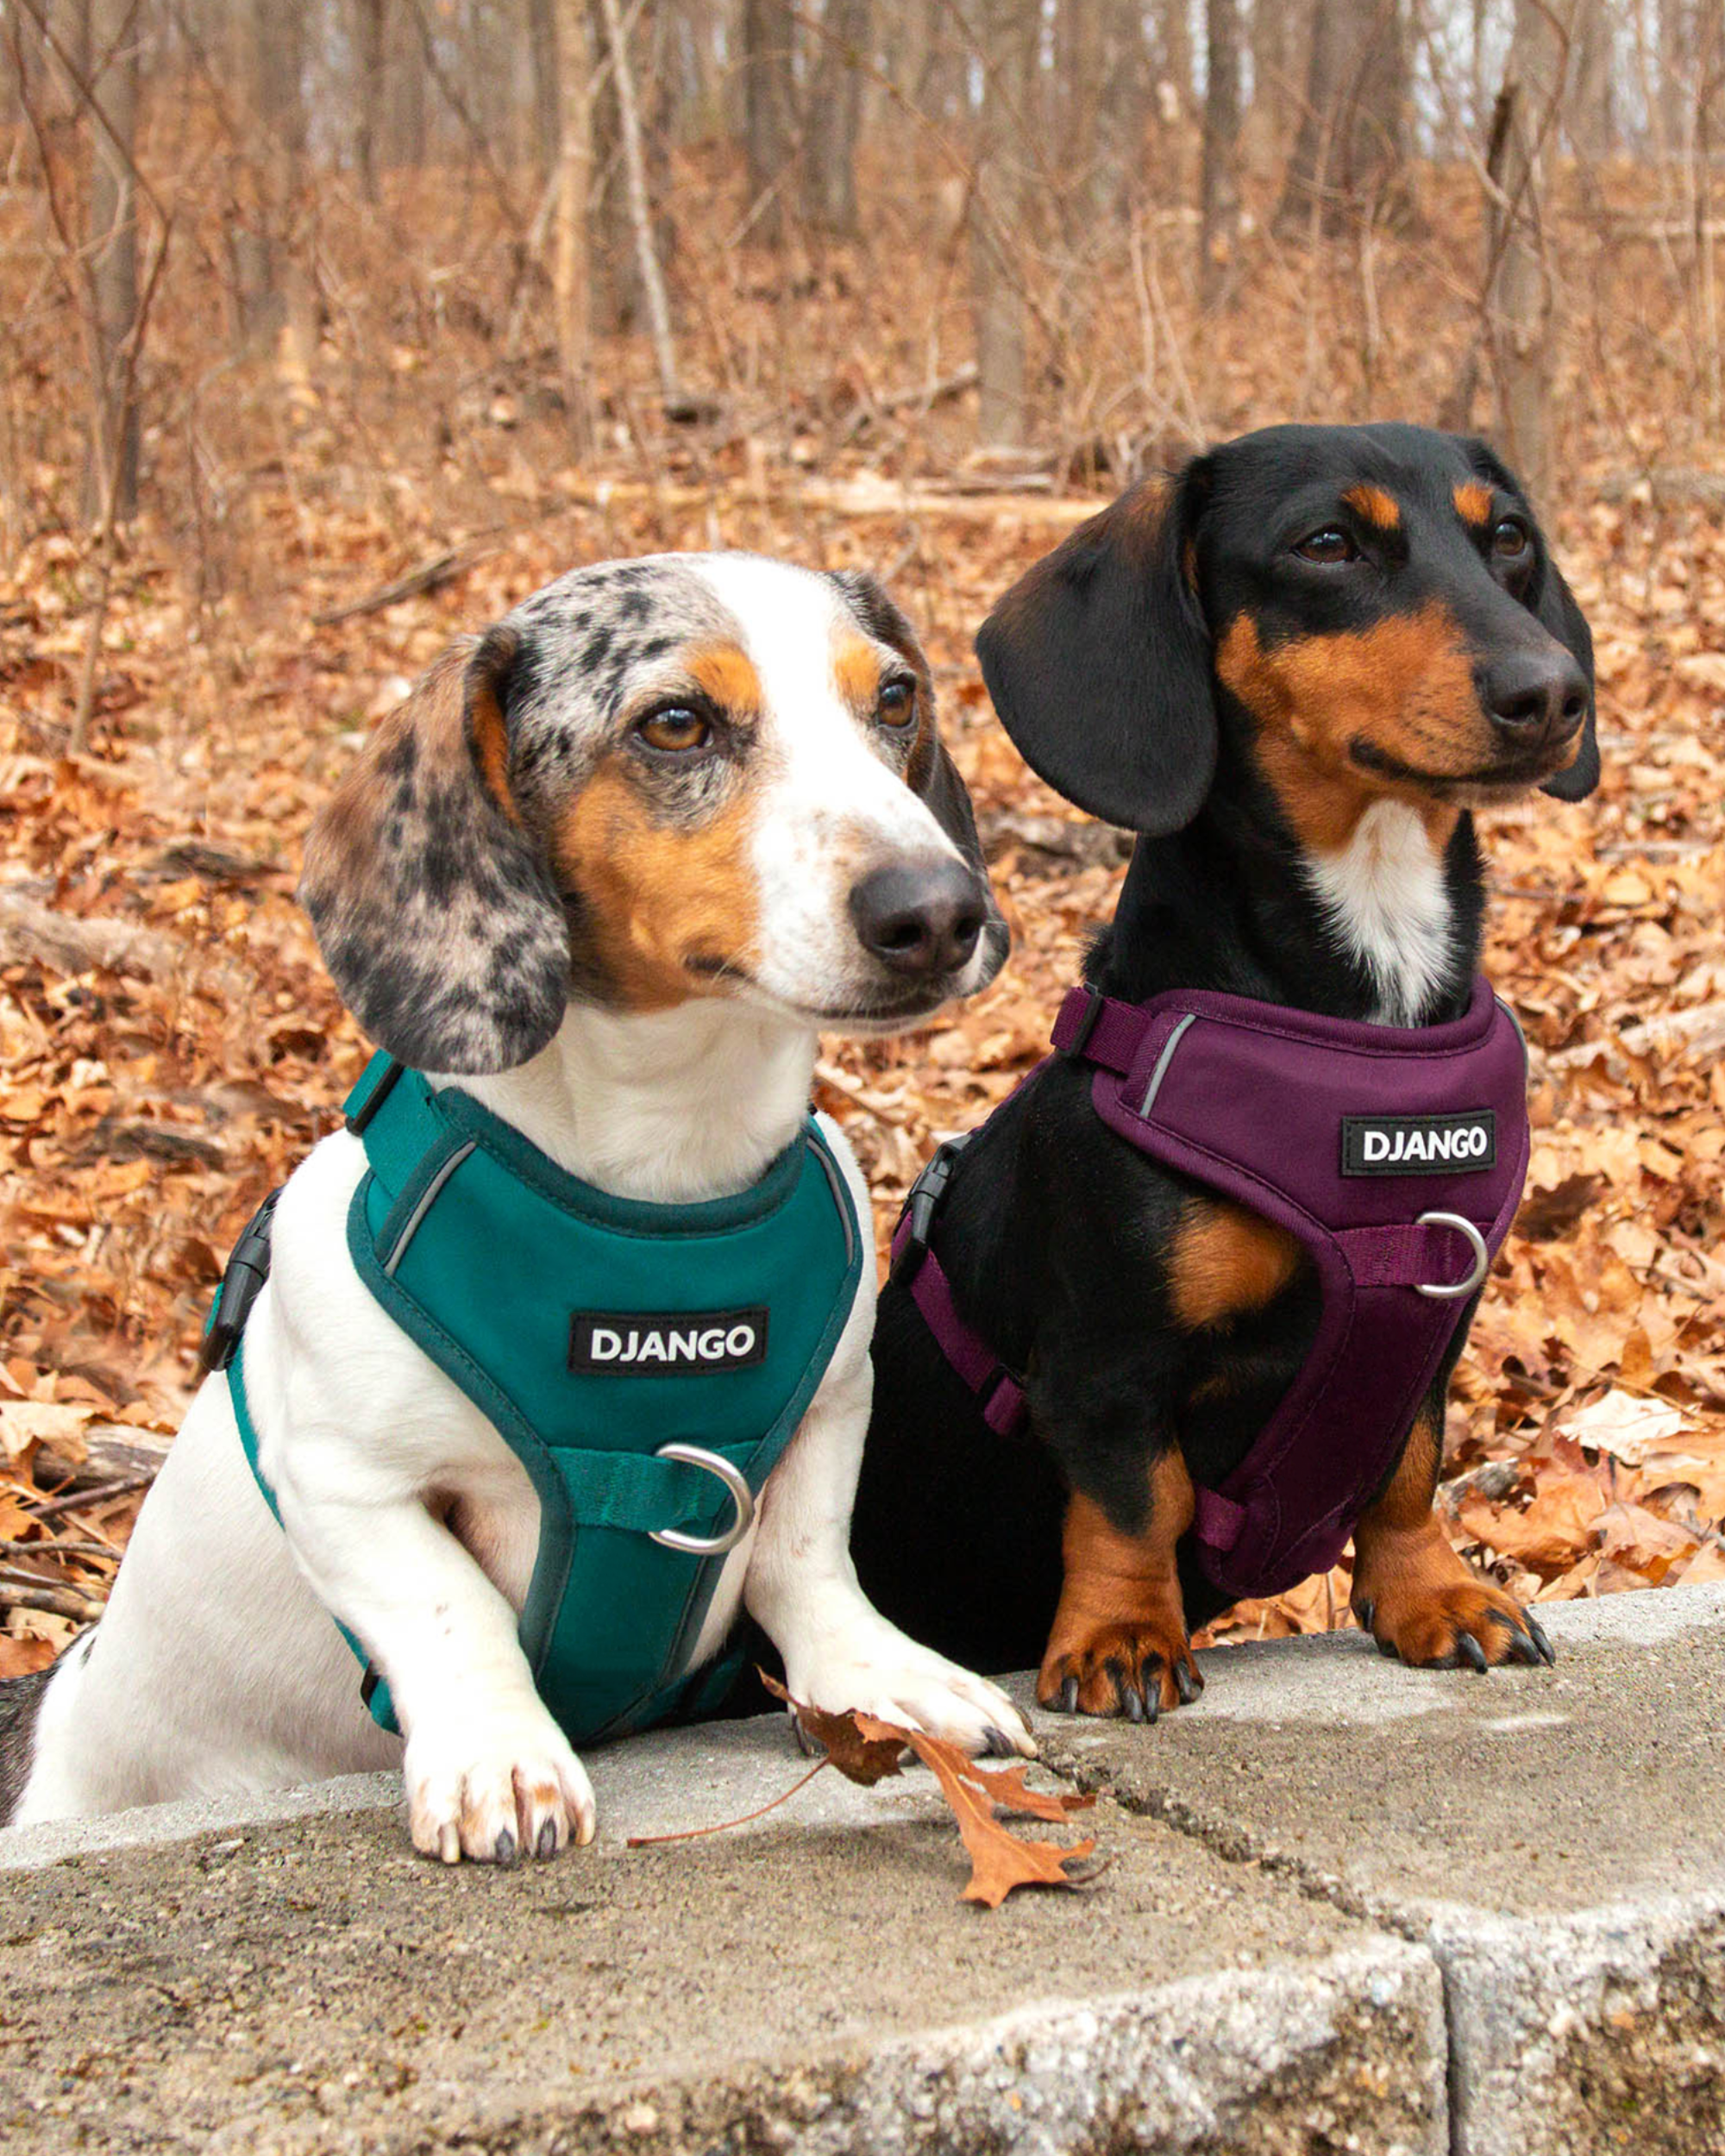  Reflective Small Dog Harness -English Bulldog- Easy Walk Dog  Harness- Small Secure Dog Harness-Adjustable Small Dog Harness (Beige, S) :  Pet Supplies